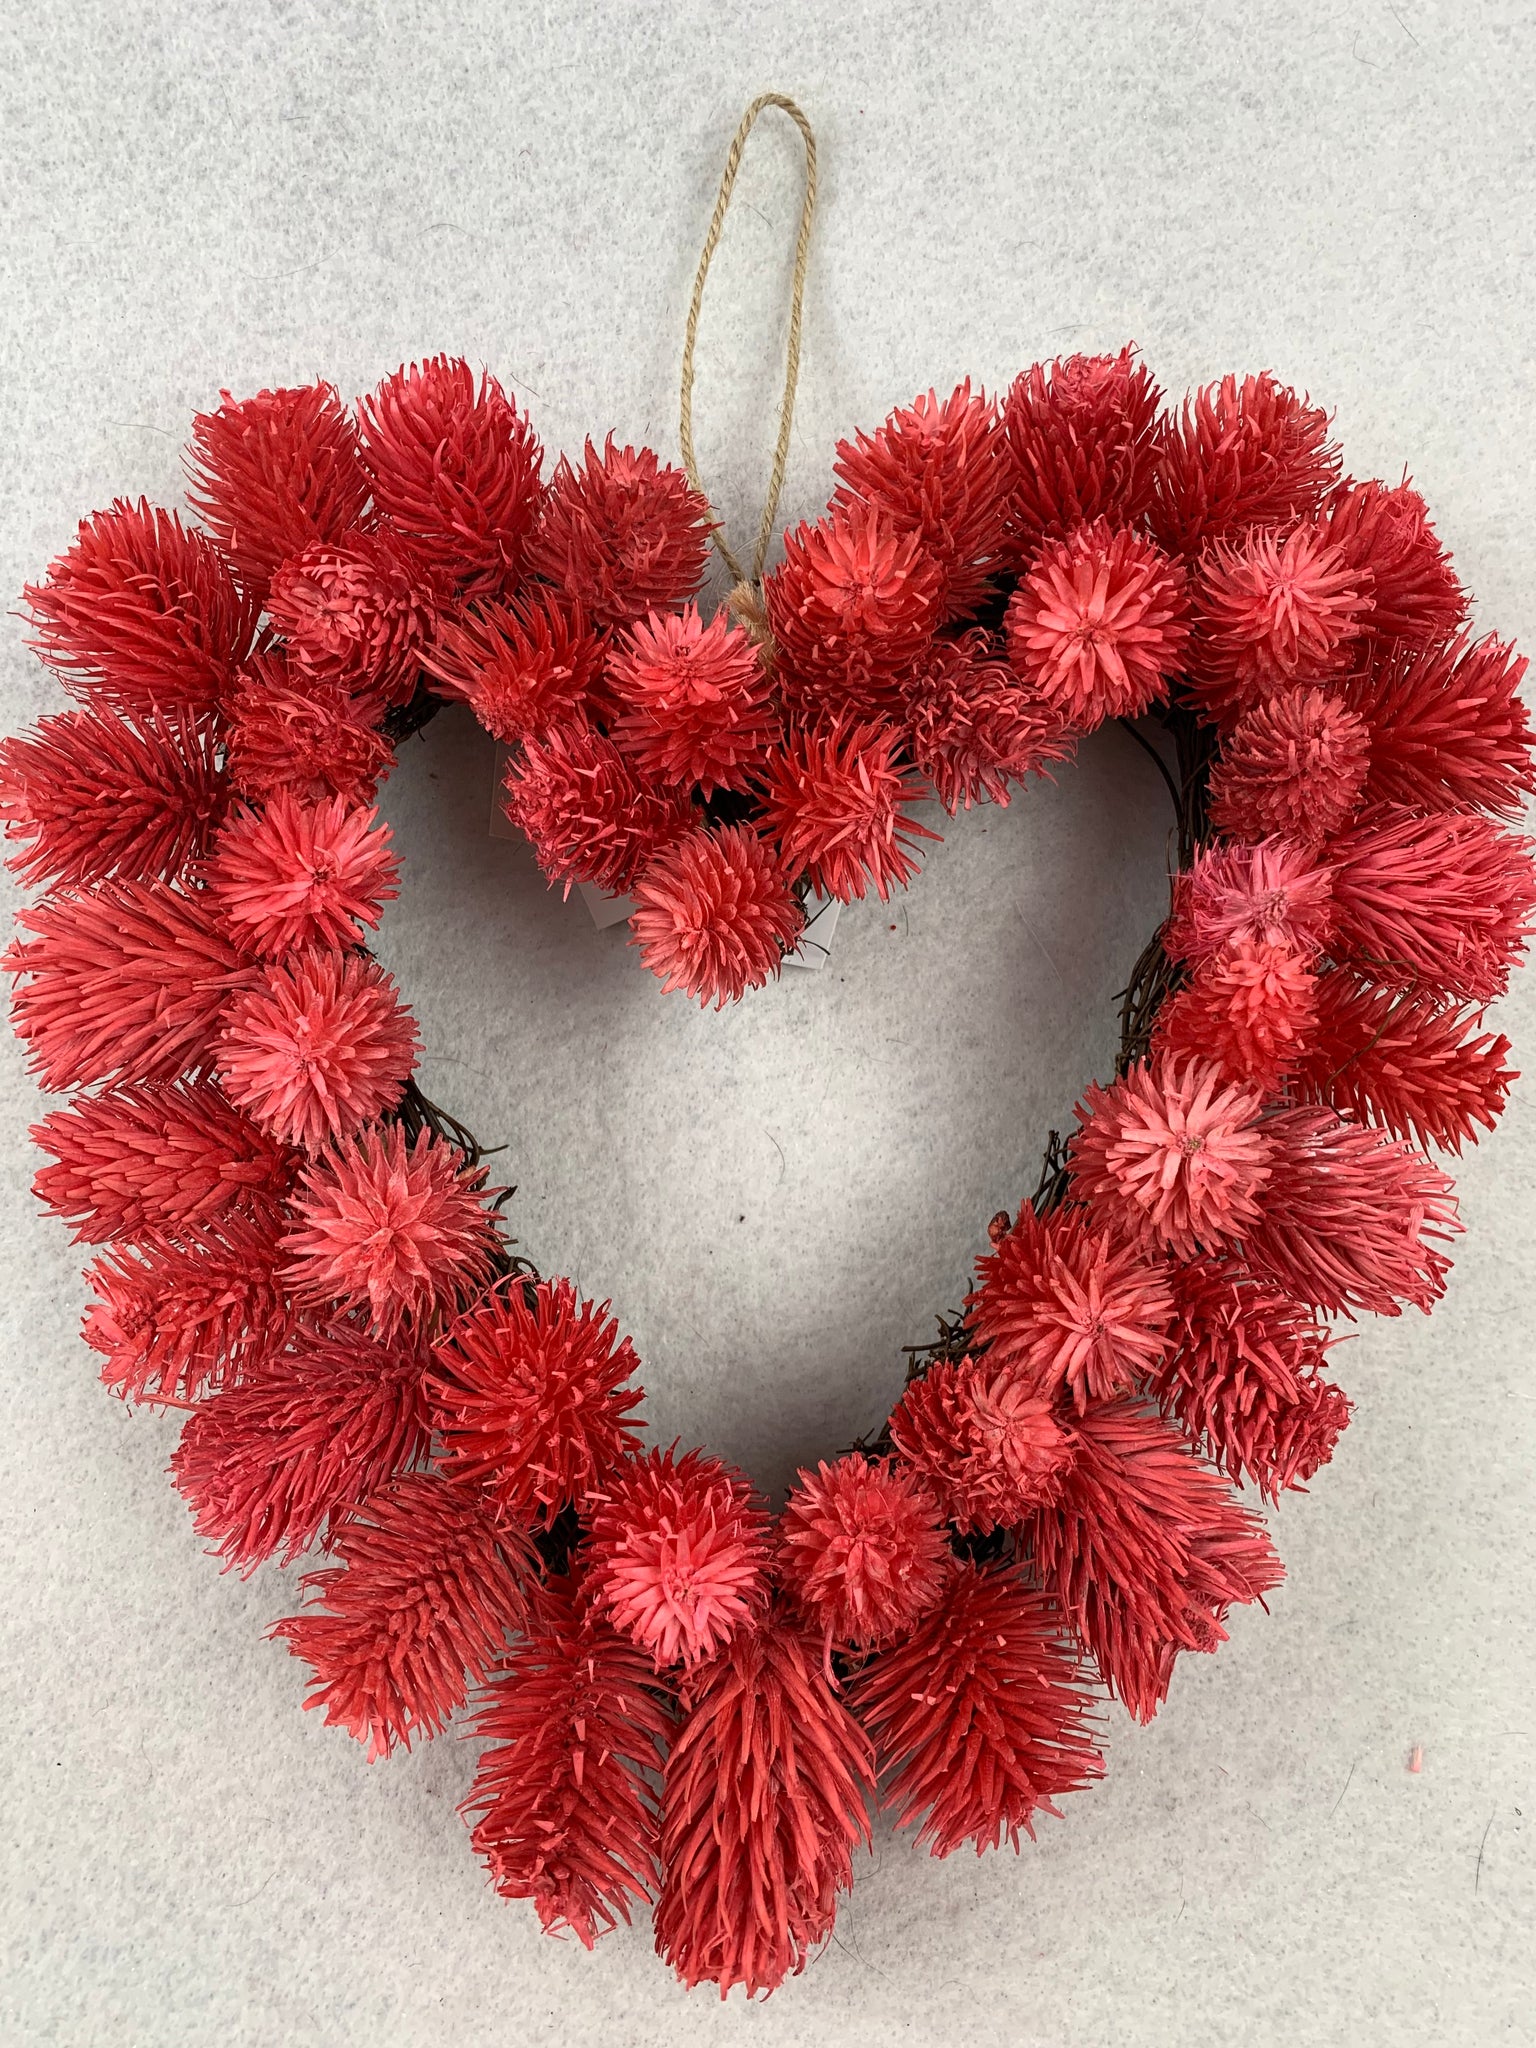 490 Wreaths - Heart Shape ideas  heart shaped wreaths, wreaths